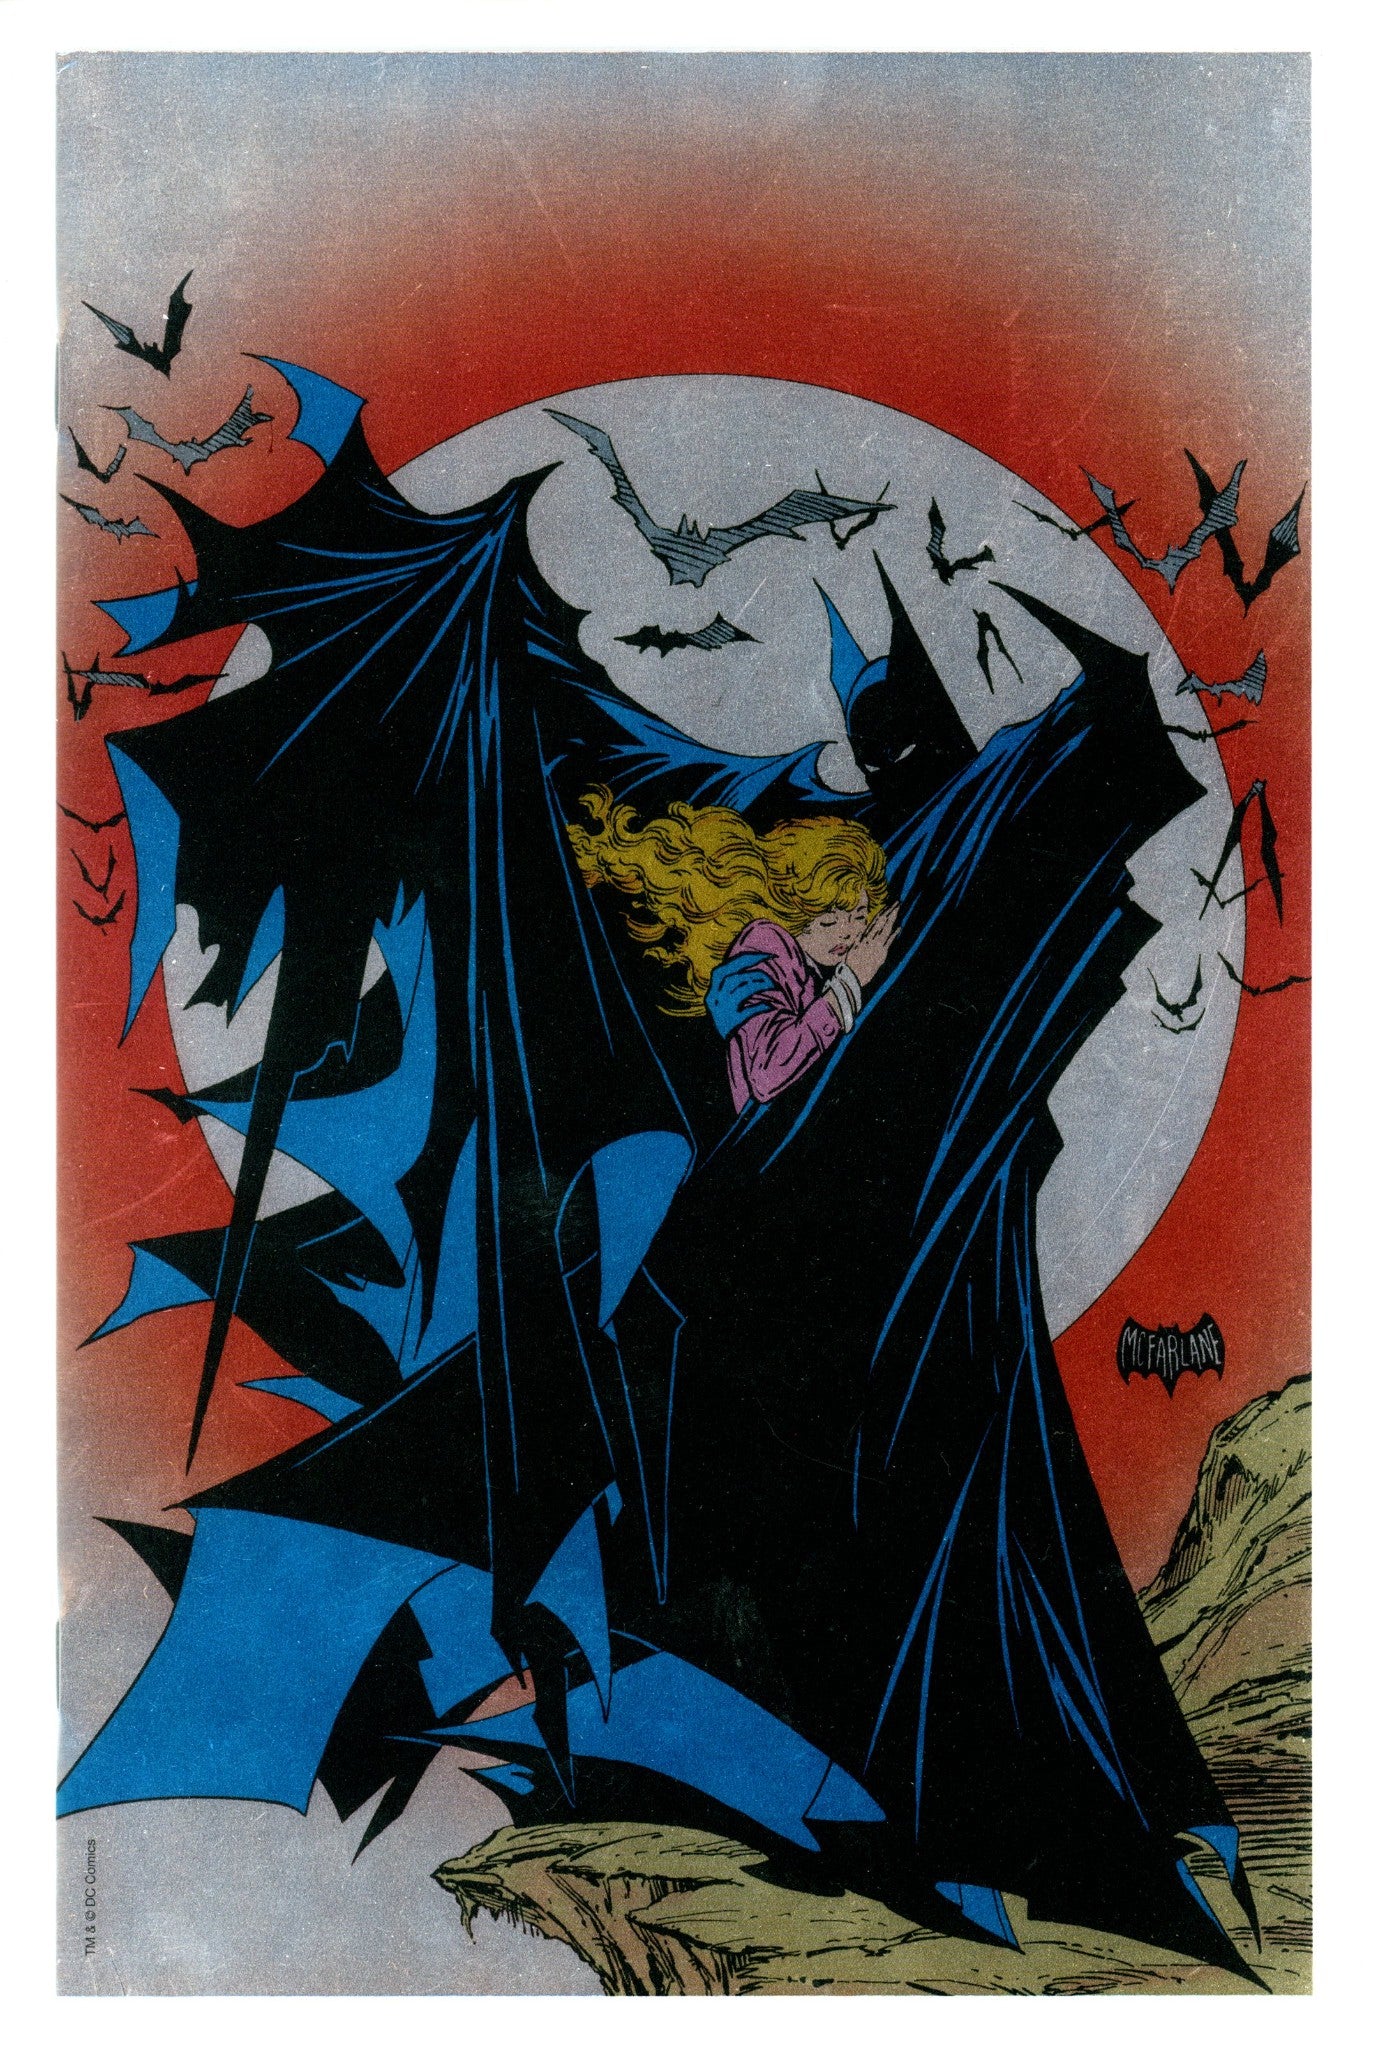 Batman Vol 1 423 NM- (9.2) (2023) McFarlane Foil Virgin Exclusive Variant 